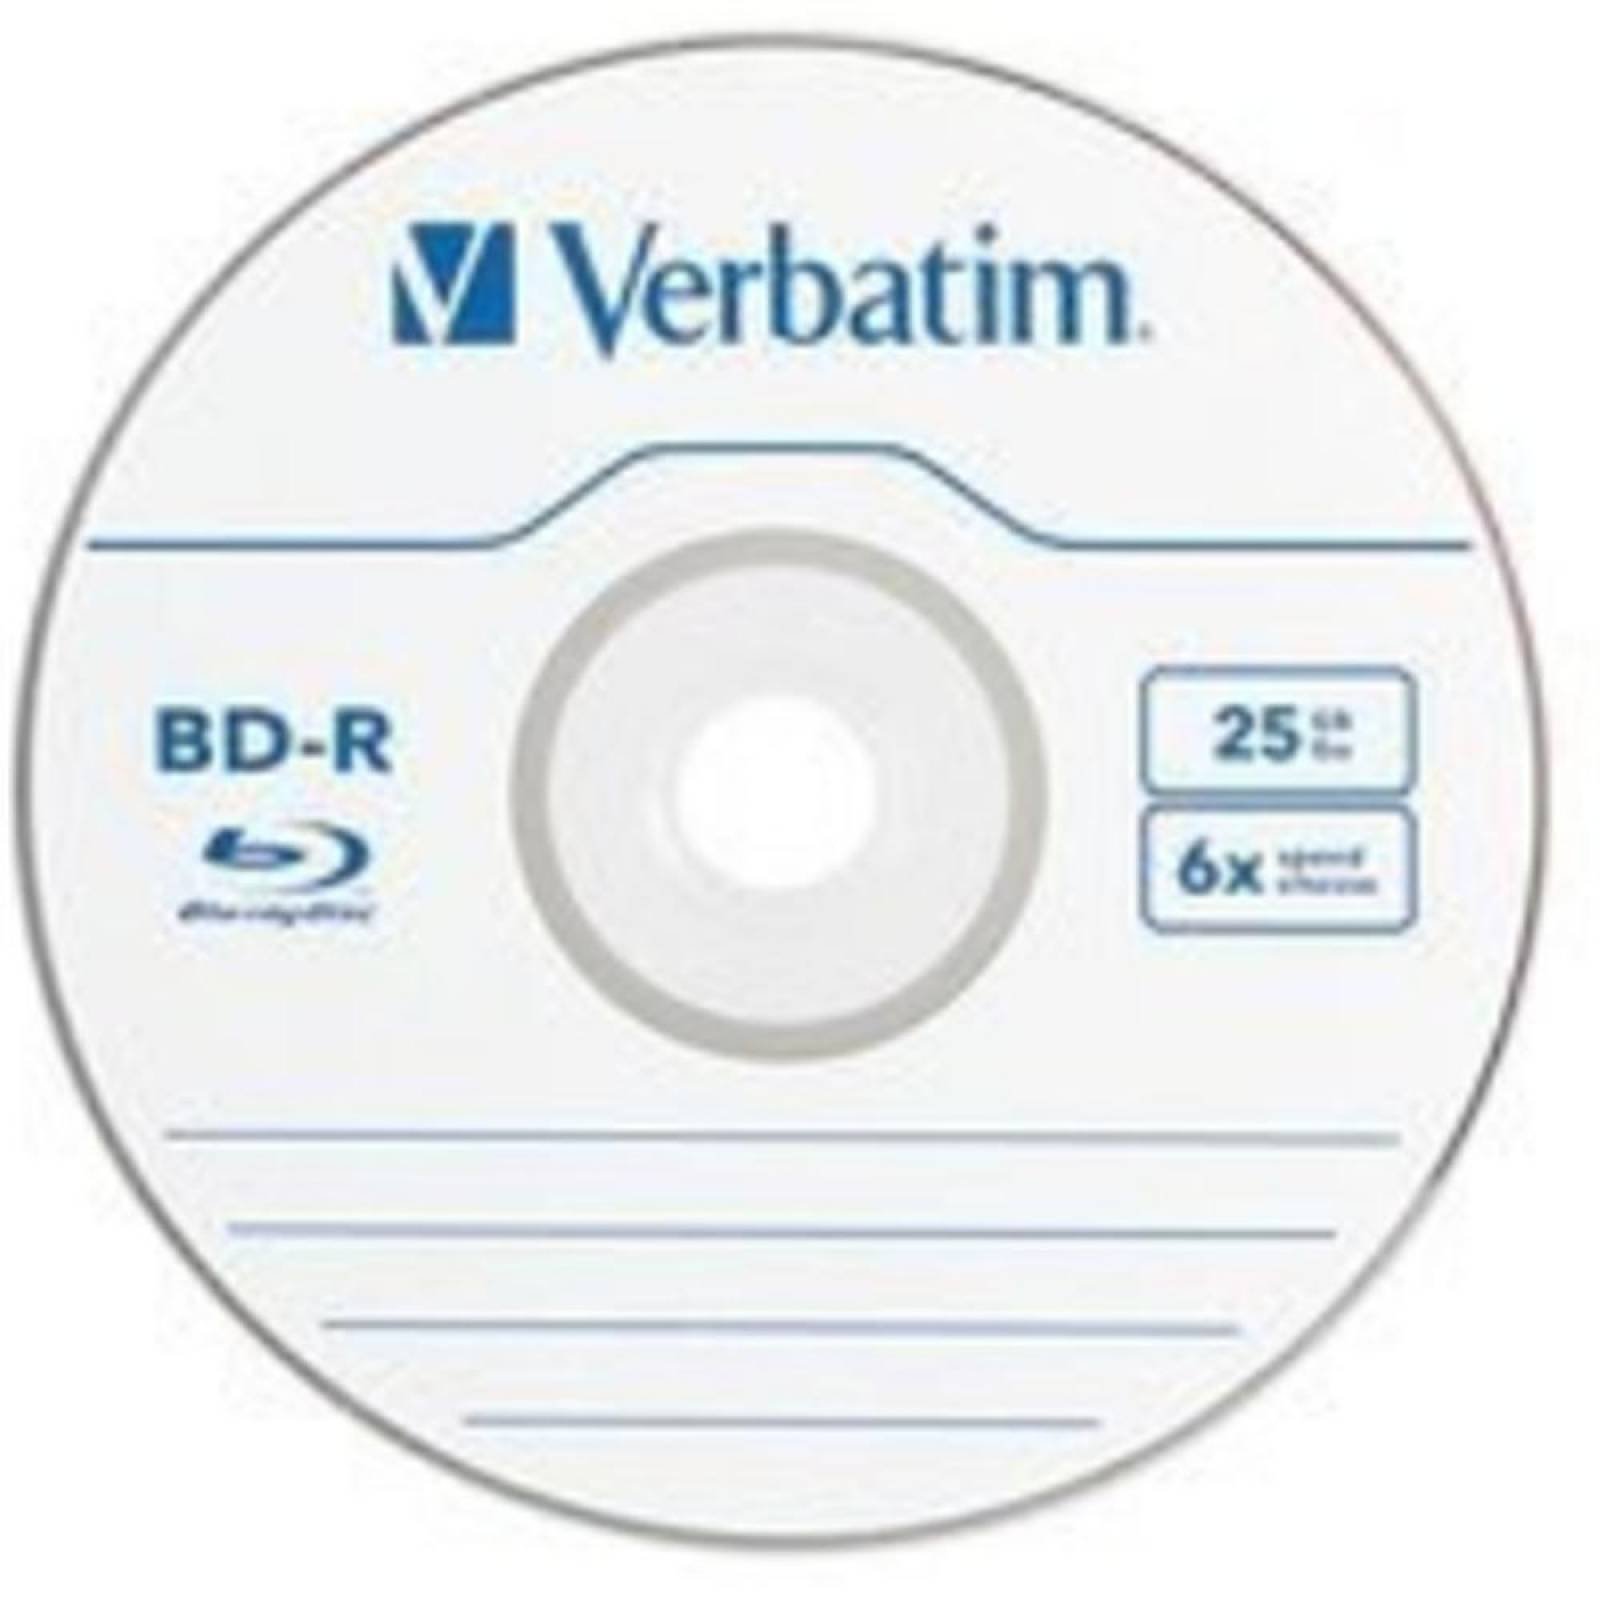 BD-R BLU-RAY VERBATIM EN ESTUCHE 25GB 6X VB98497 